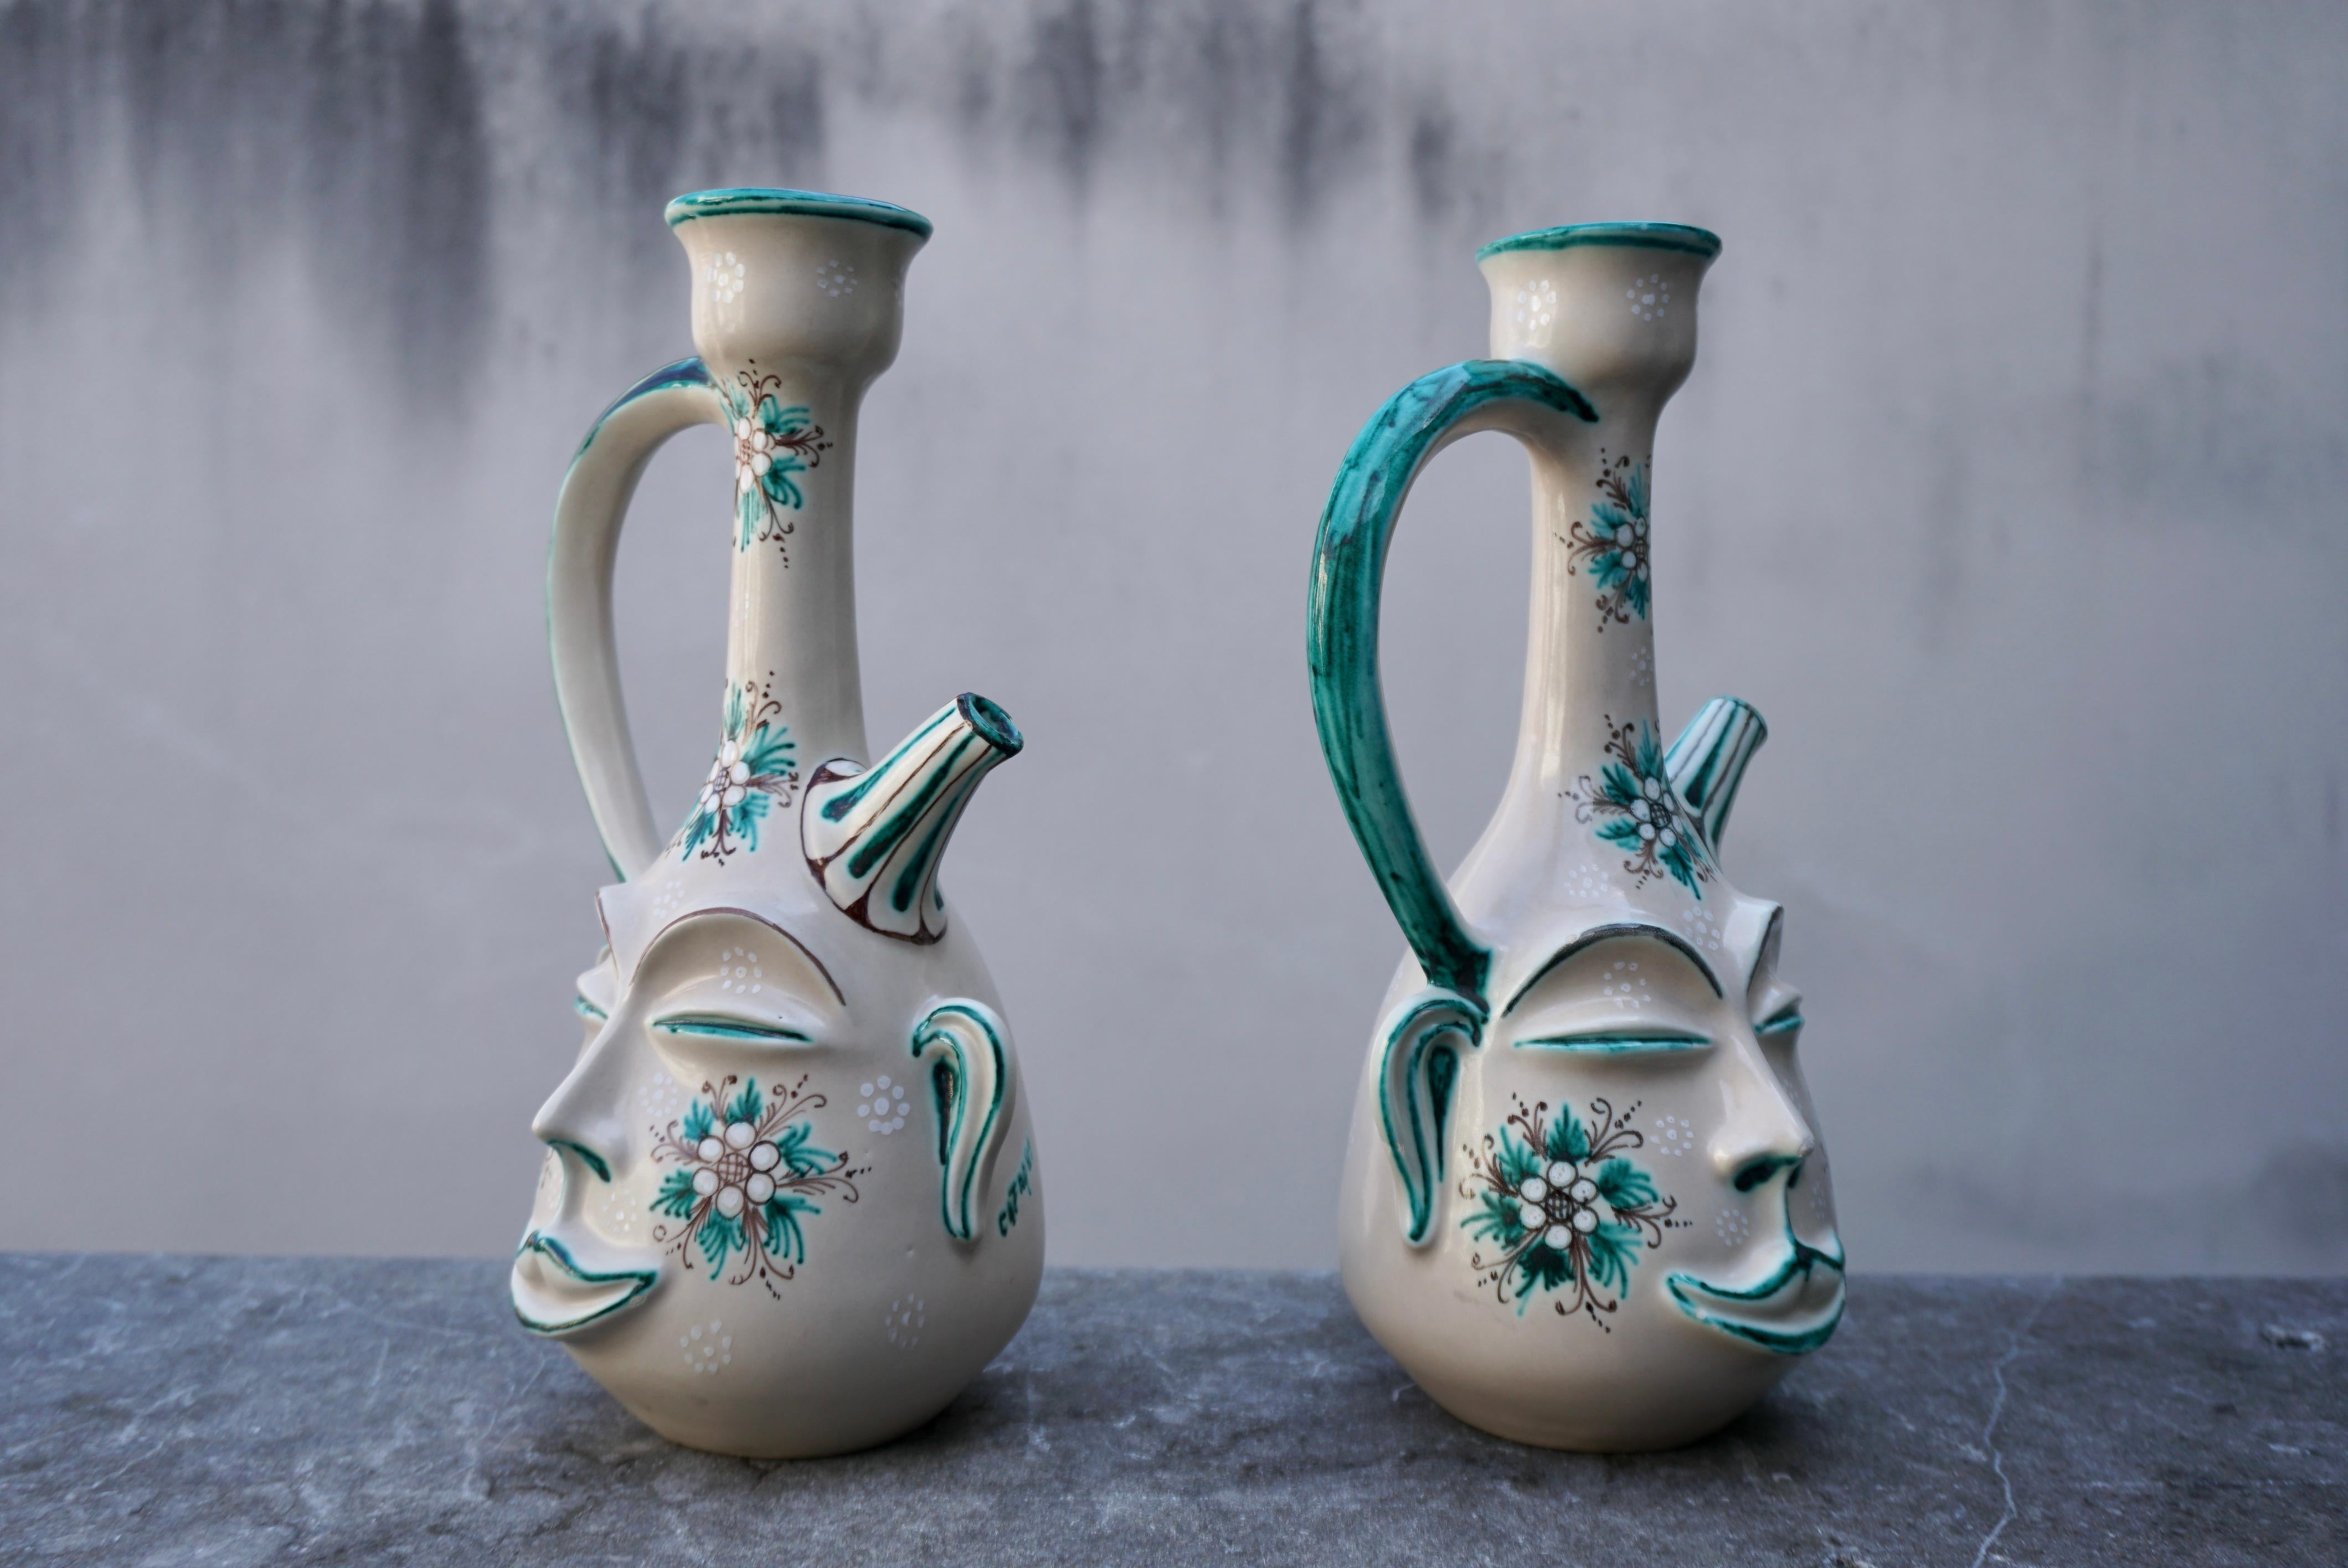 Italian Handmade Terracotta Pitcher Vase by Maga S. Stefano, Sicily 1970 For Sale